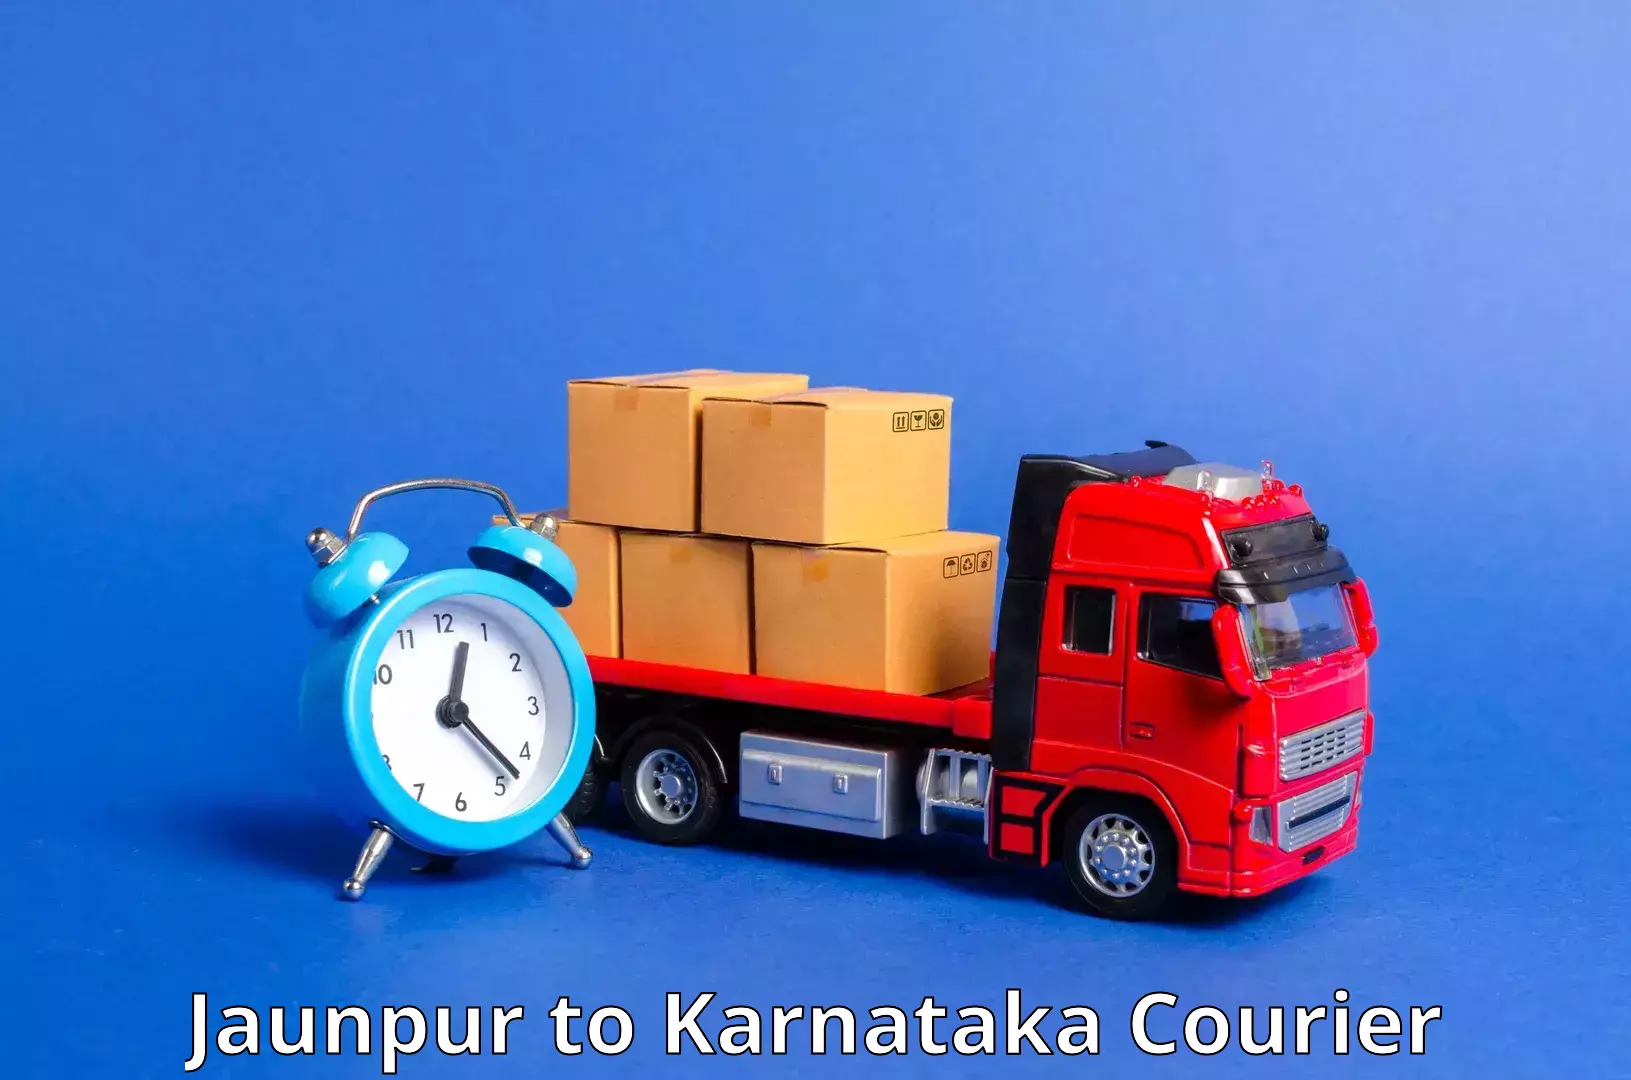 User-friendly delivery service Jaunpur to Karnataka